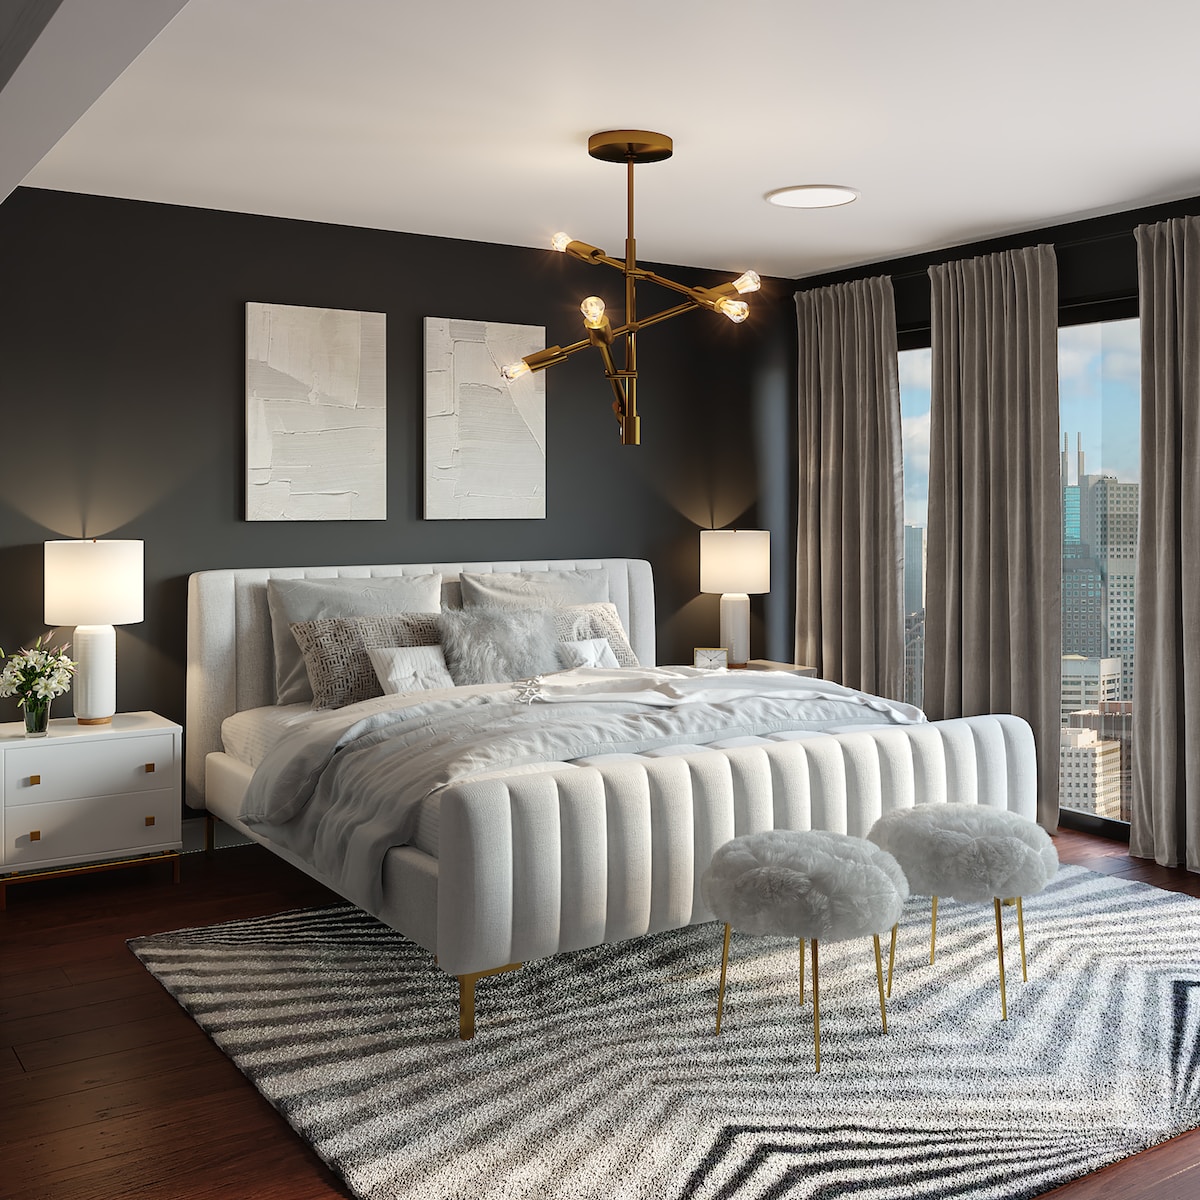 Luxury Bedroom Design – Making The Perfect Bedroom